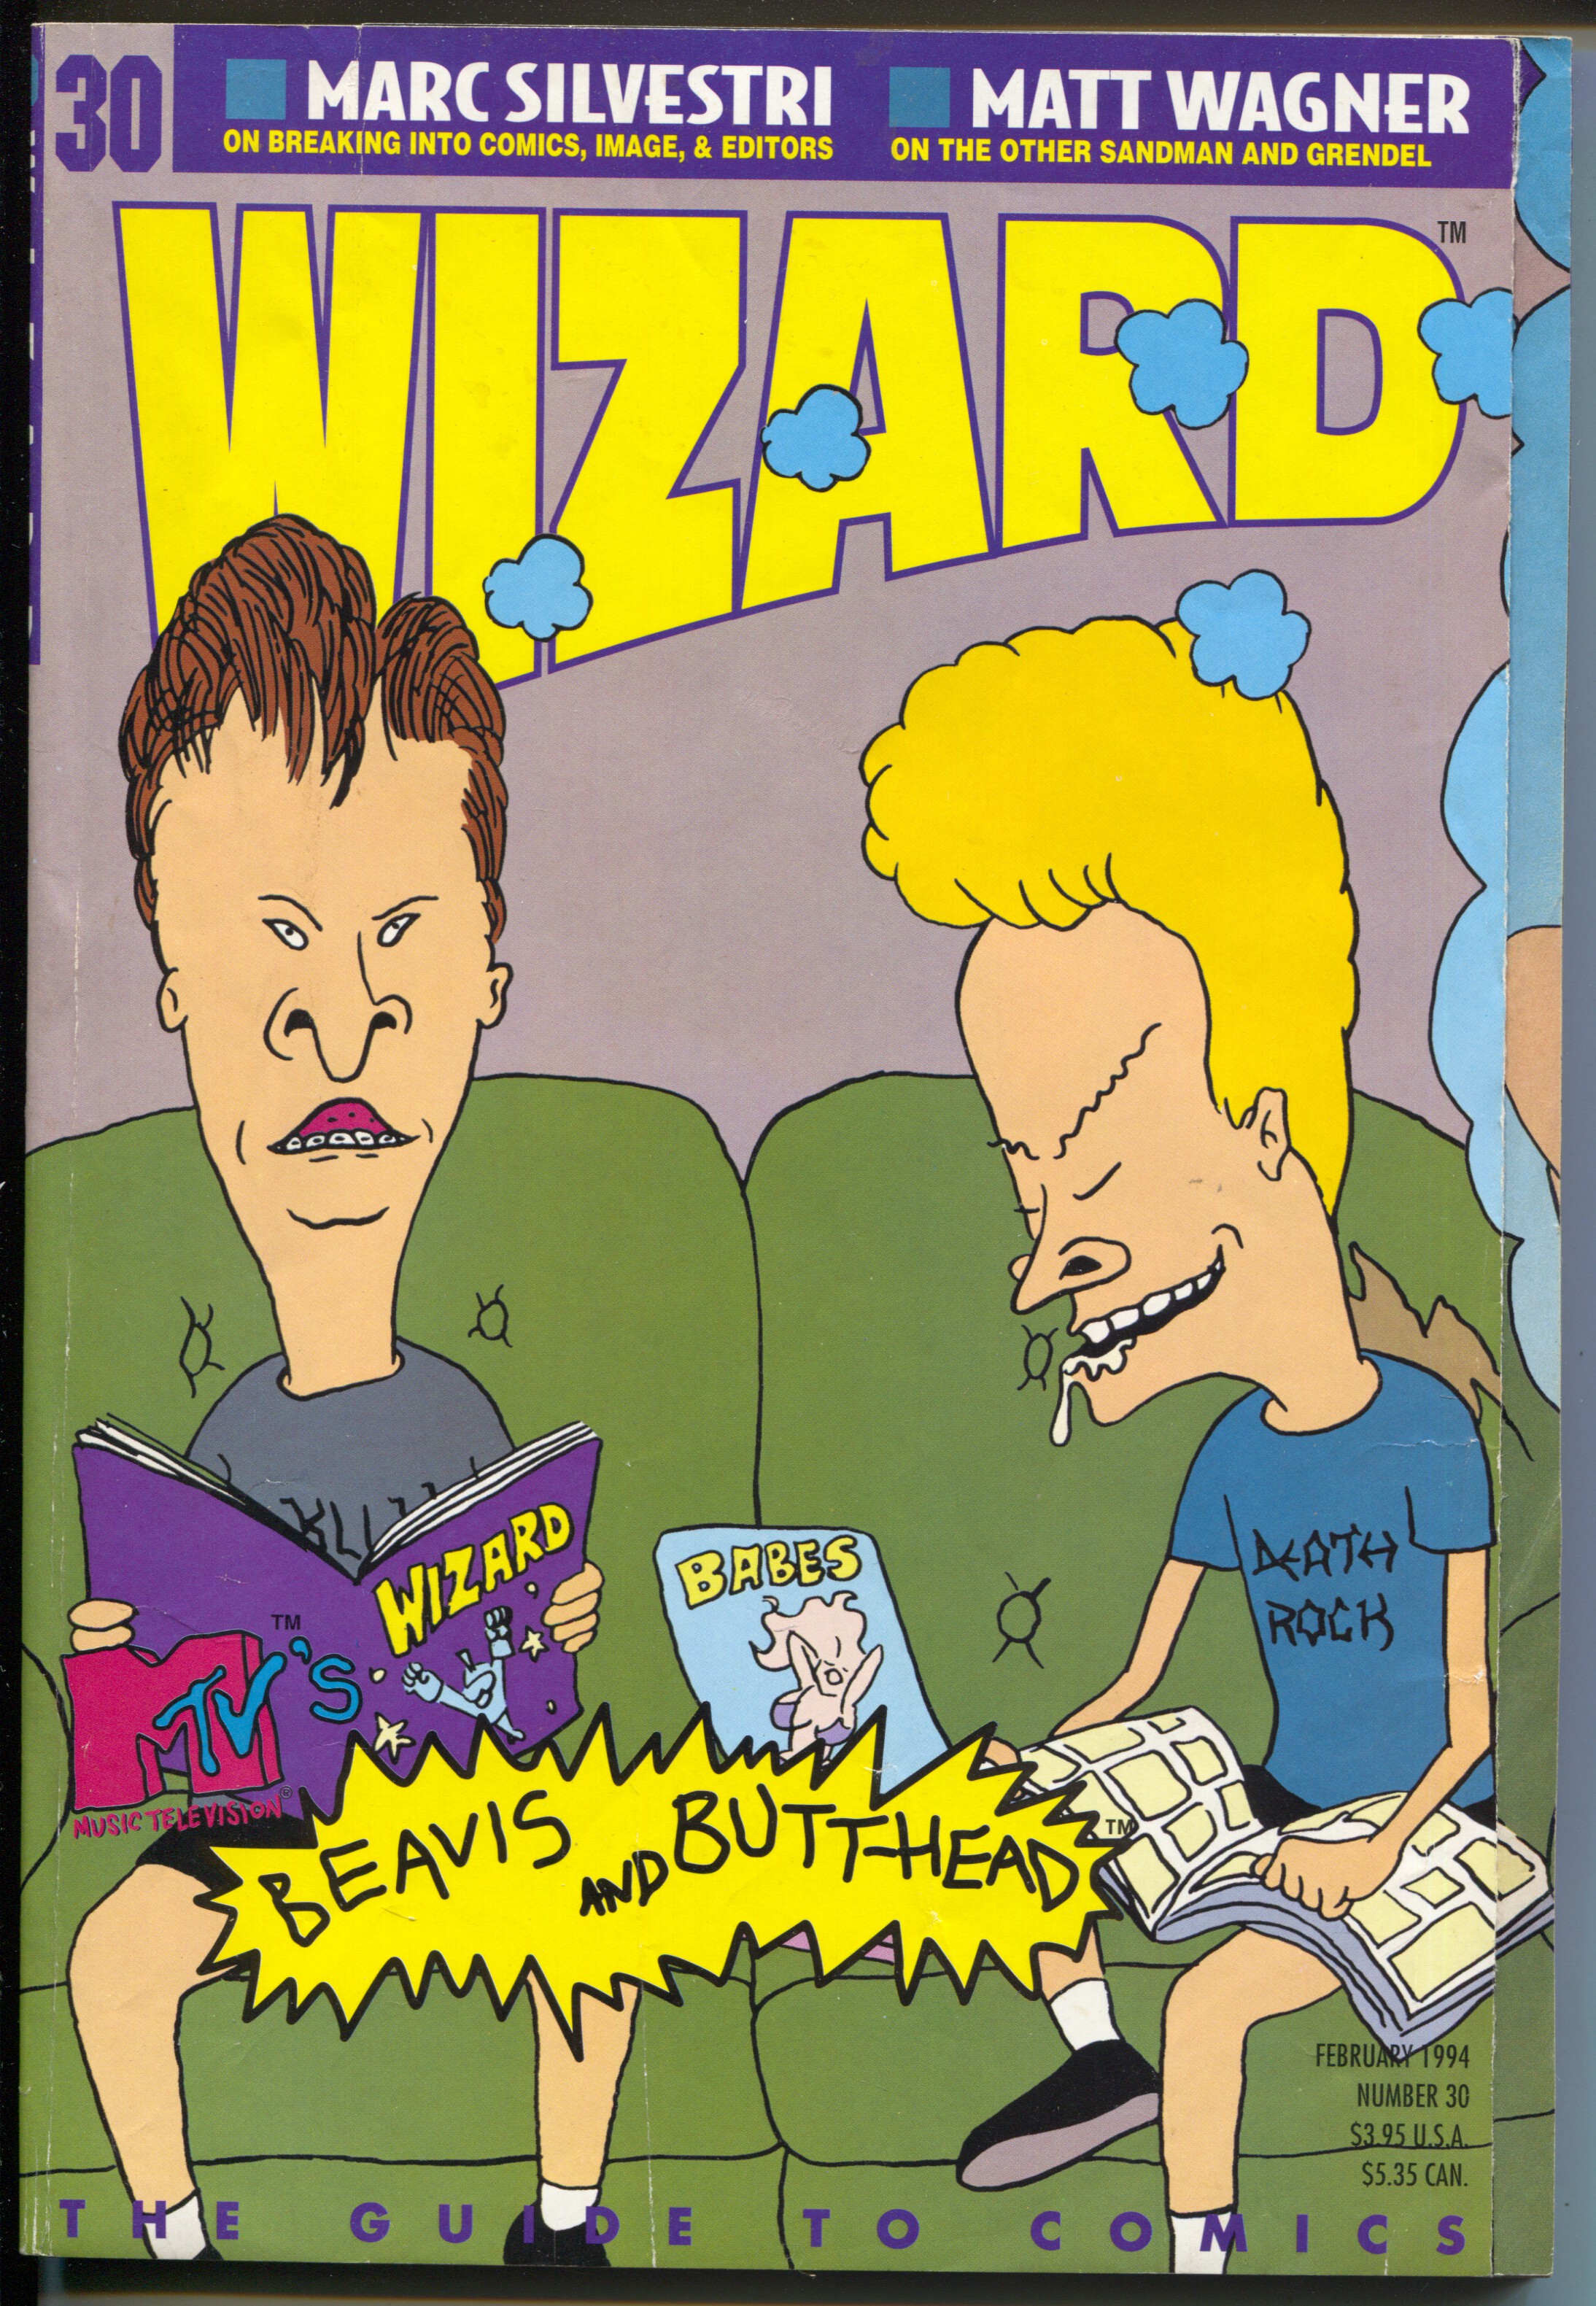 Beavis and butthead comics